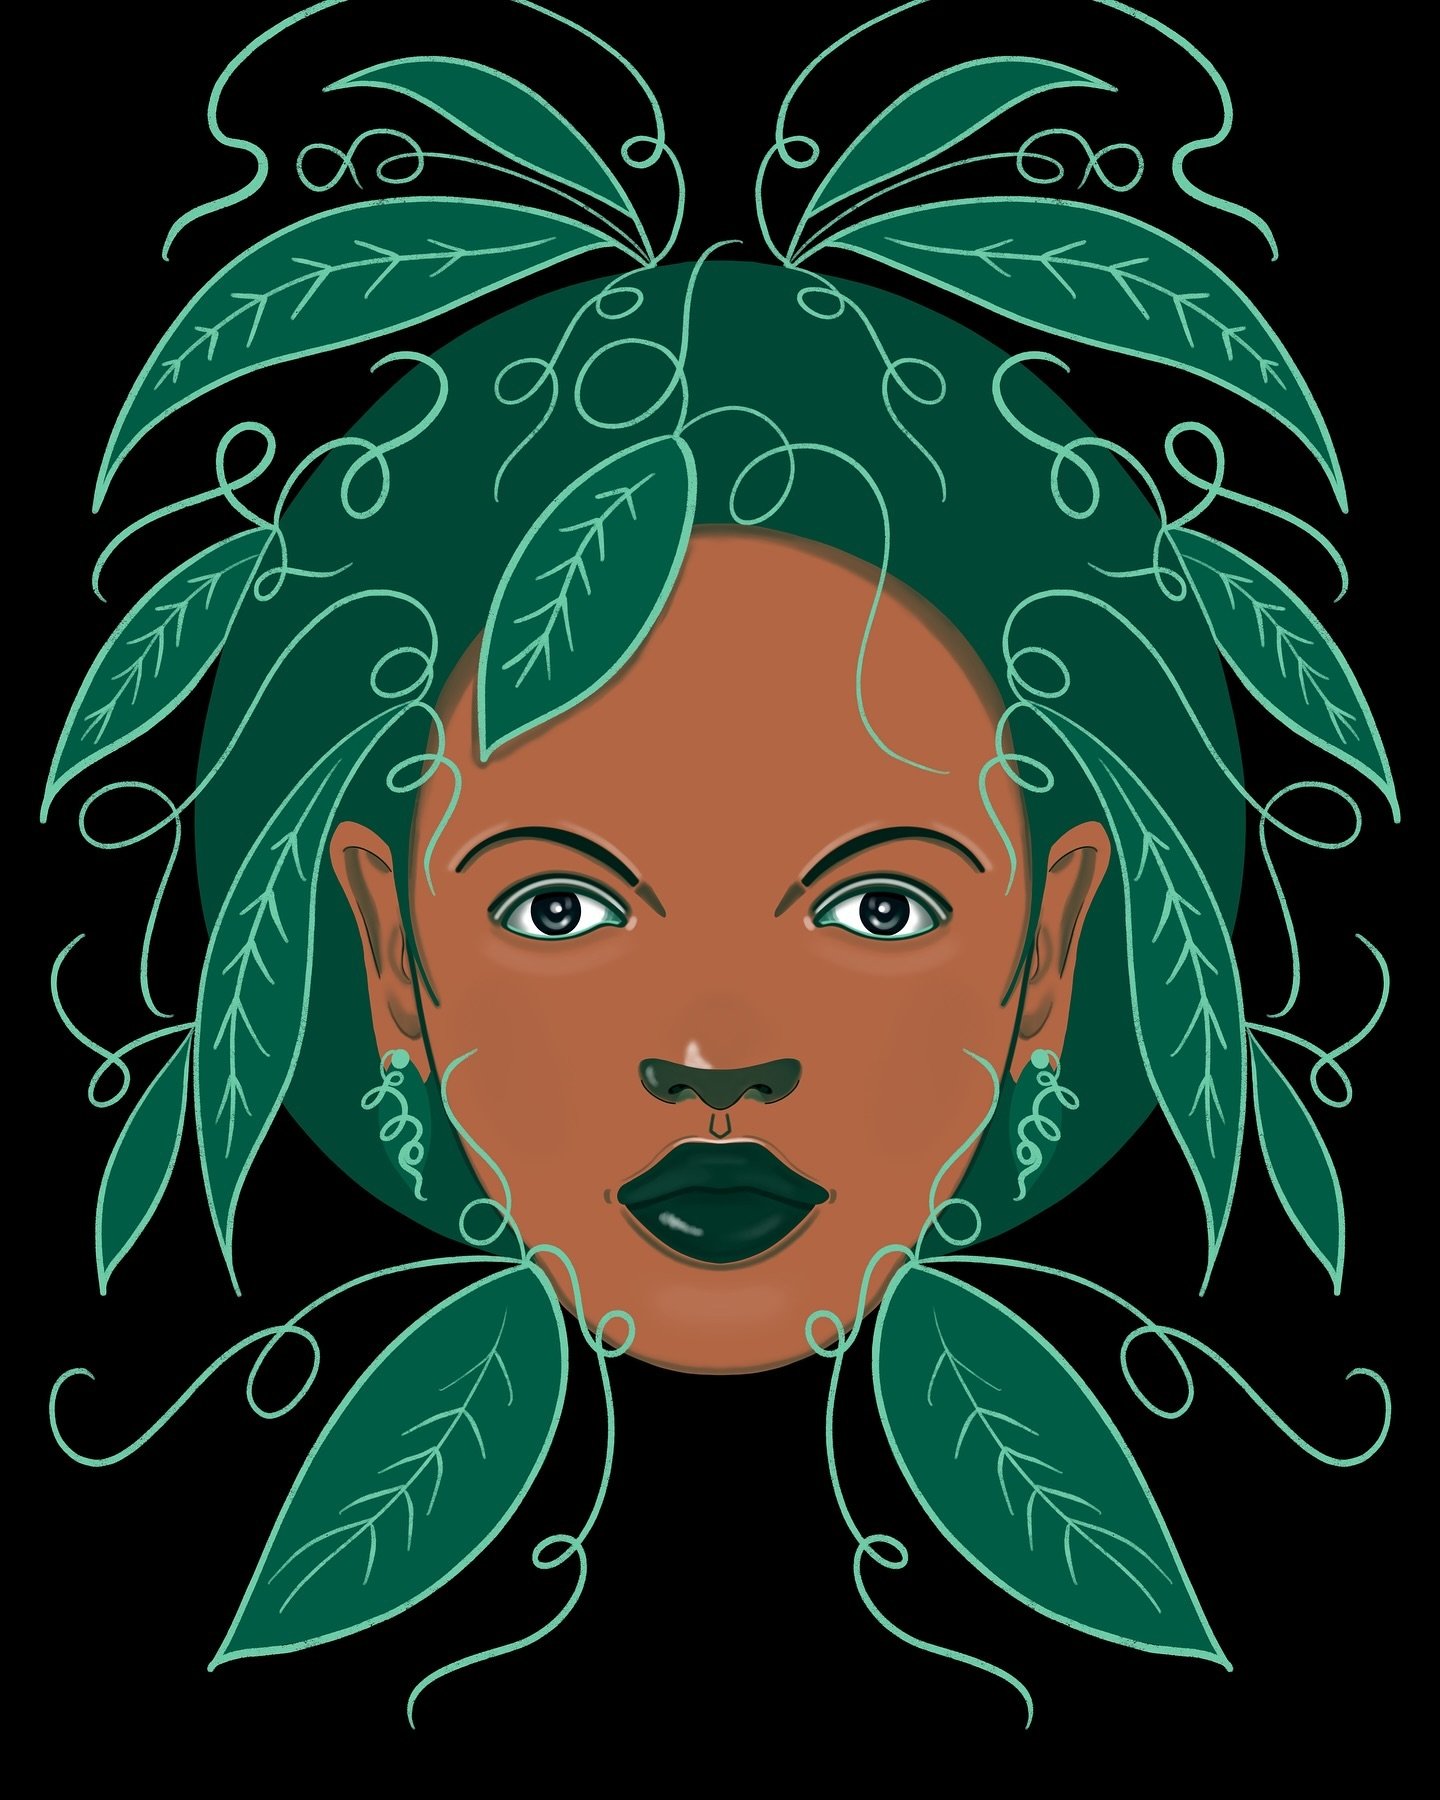 Green Veil

 #art #illustration #drawing #draw #picture #sketch #Sketchbook #woman #face #portrait #gallery #artistic #ArtistsOnInstagram #IllustrationArtists #artgallery #color #ataleofart #procreate #graphicdesign #beautifulbizarre #createmagazine 